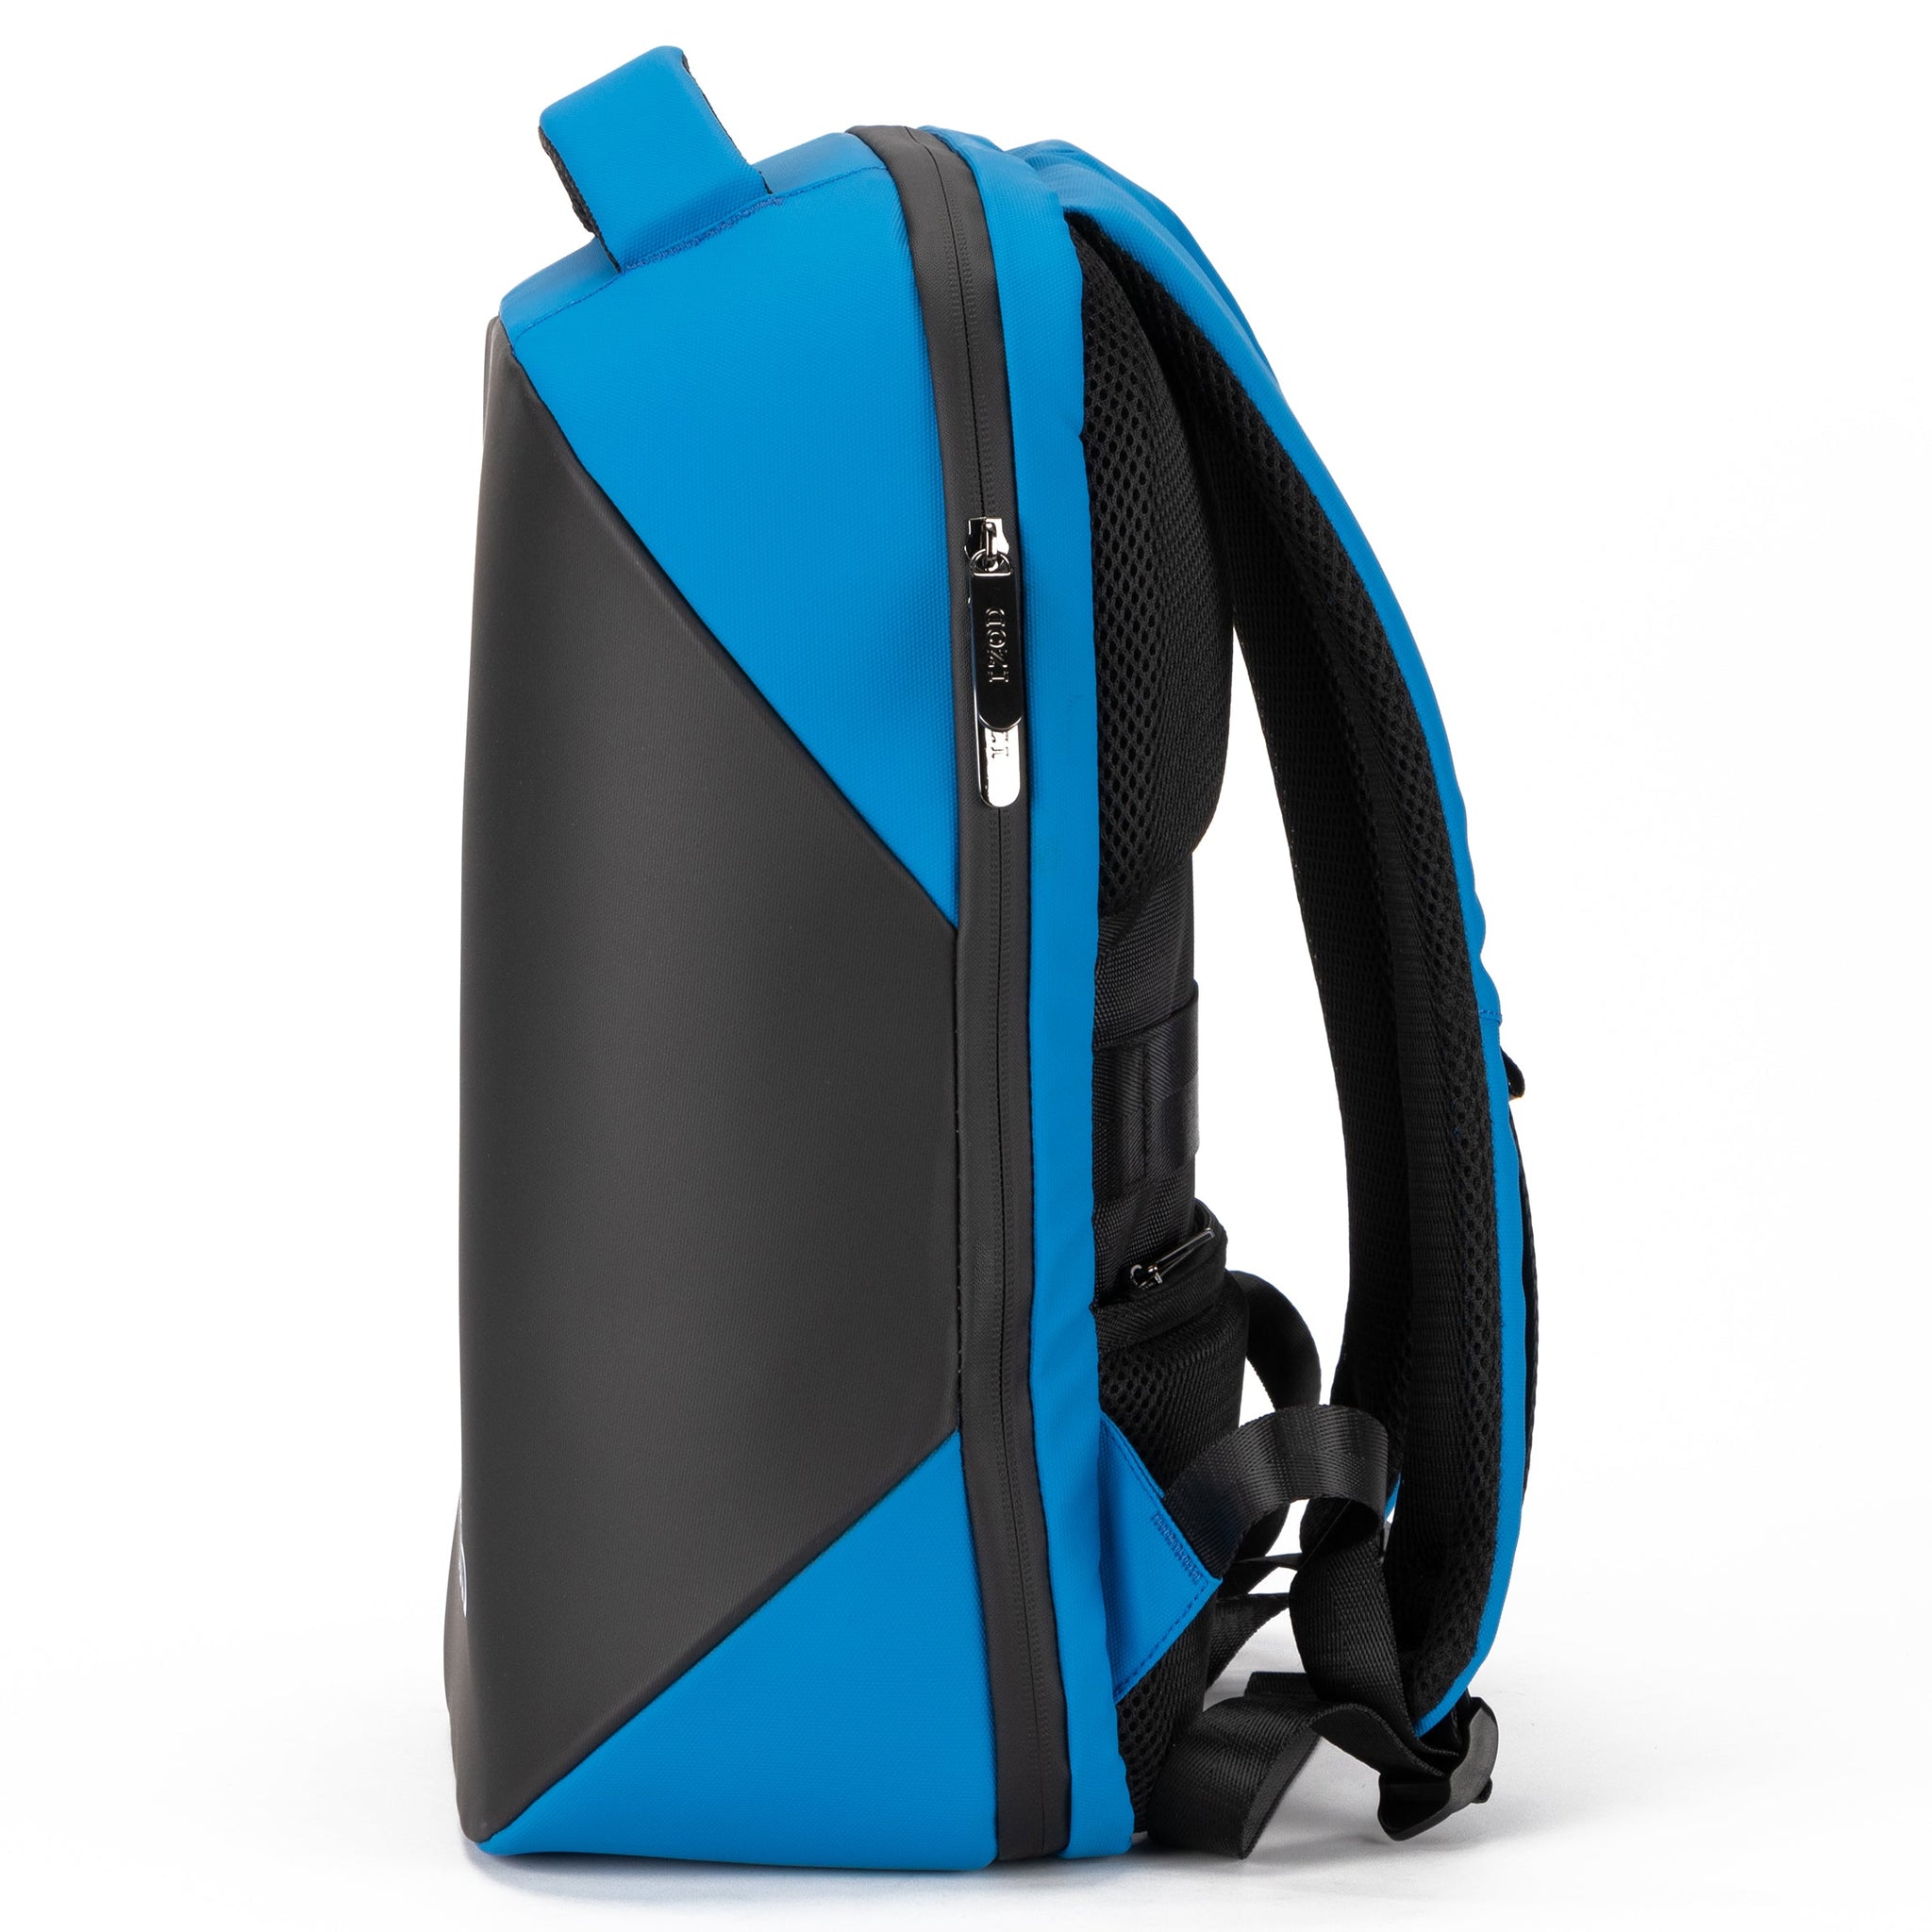 IZOD Venus Slim Anti Theft 15" Laptop Backpack